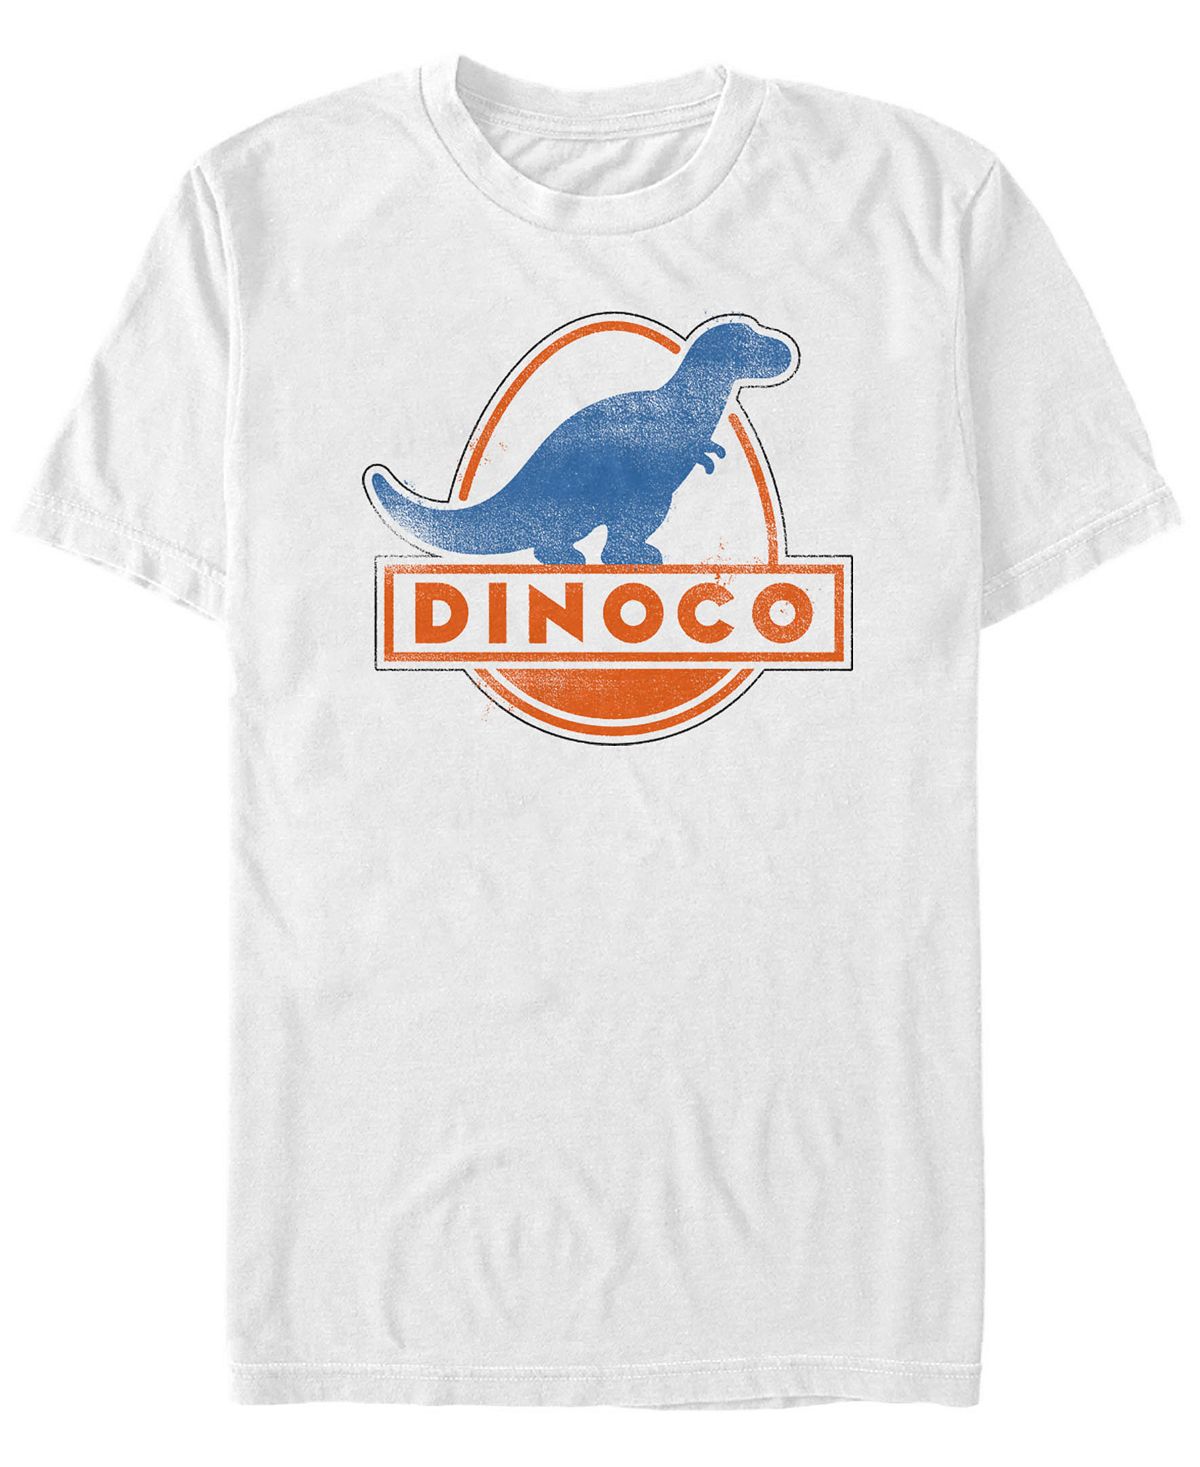 Мужская футболка с коротким рукавом с логотипом dinoco азс disney pixar cars Fifth Sun, белый